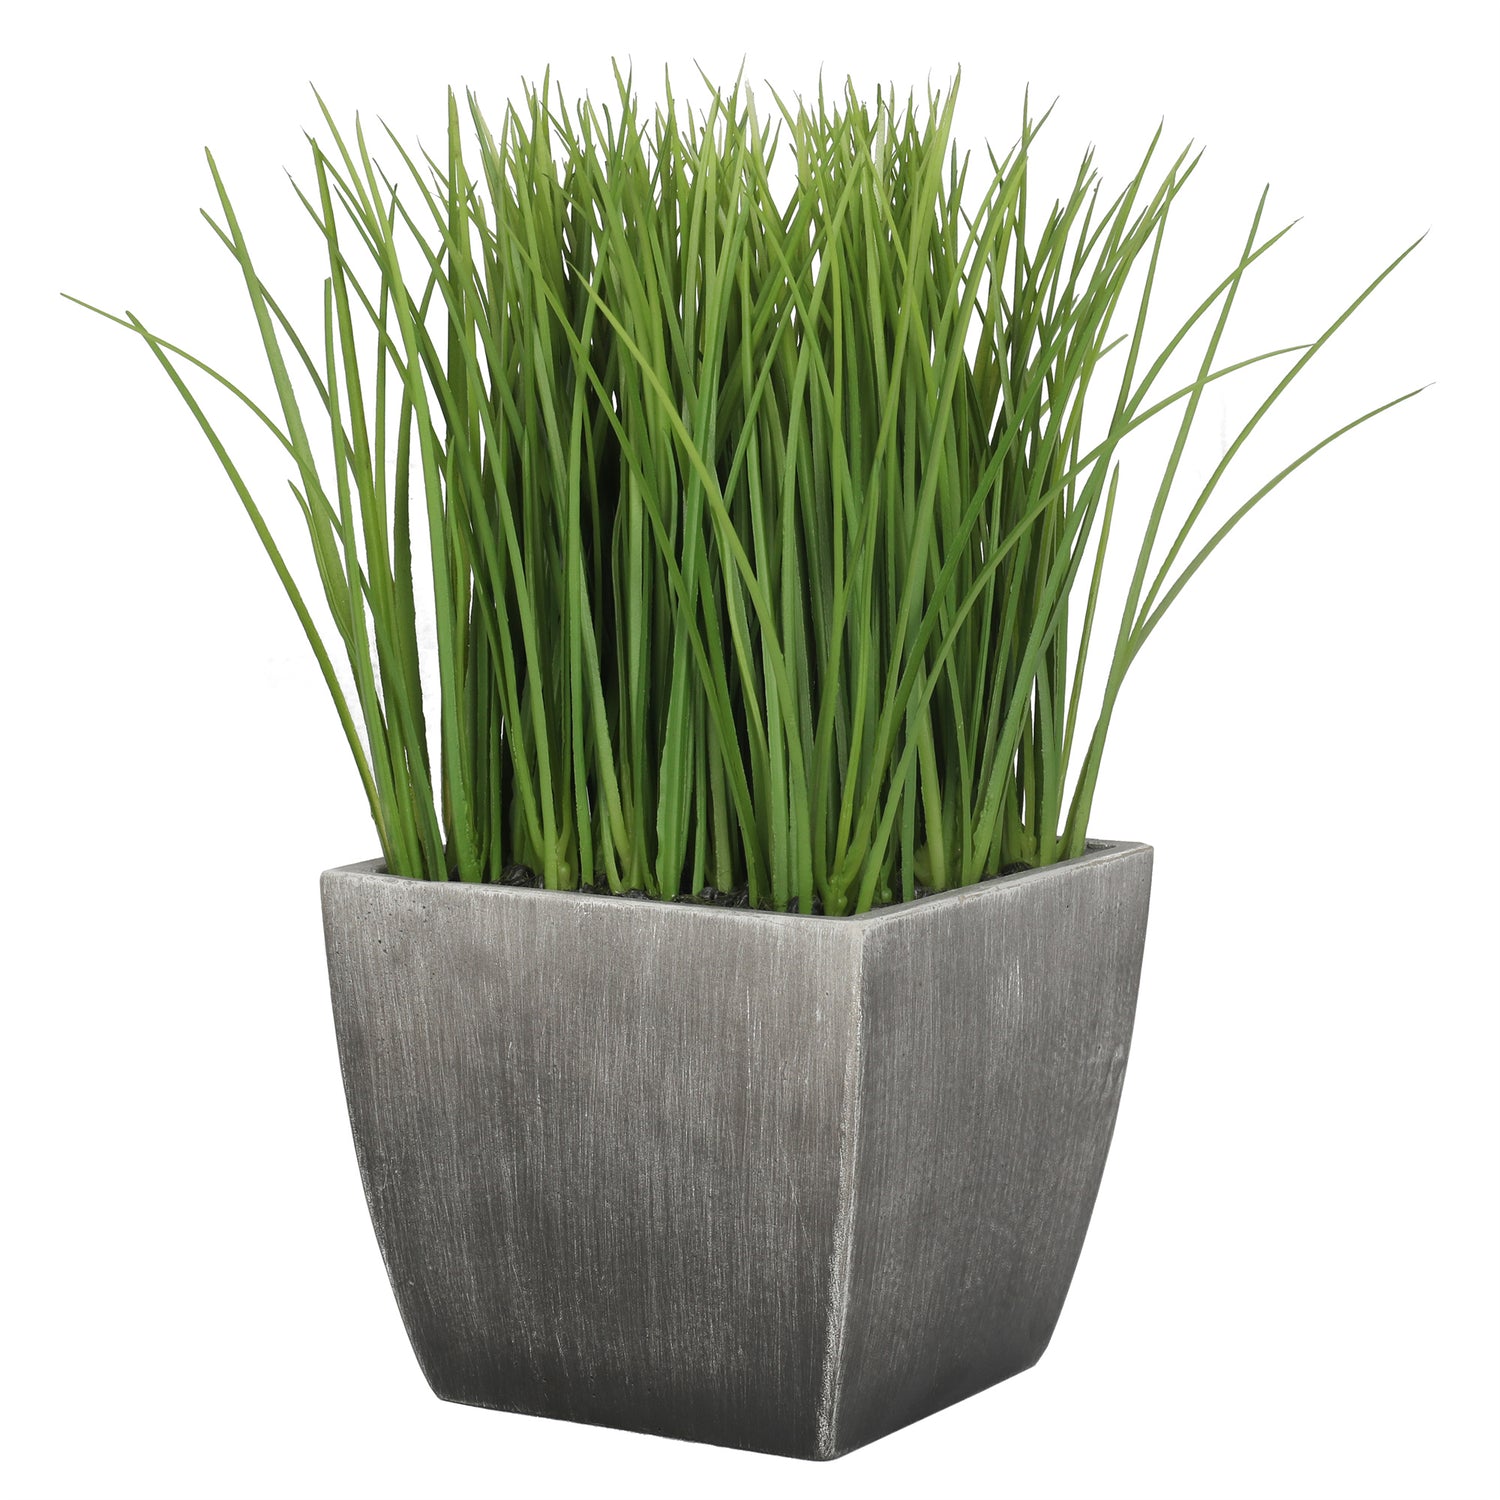 Grass verde artificial de 33 cm con macetero